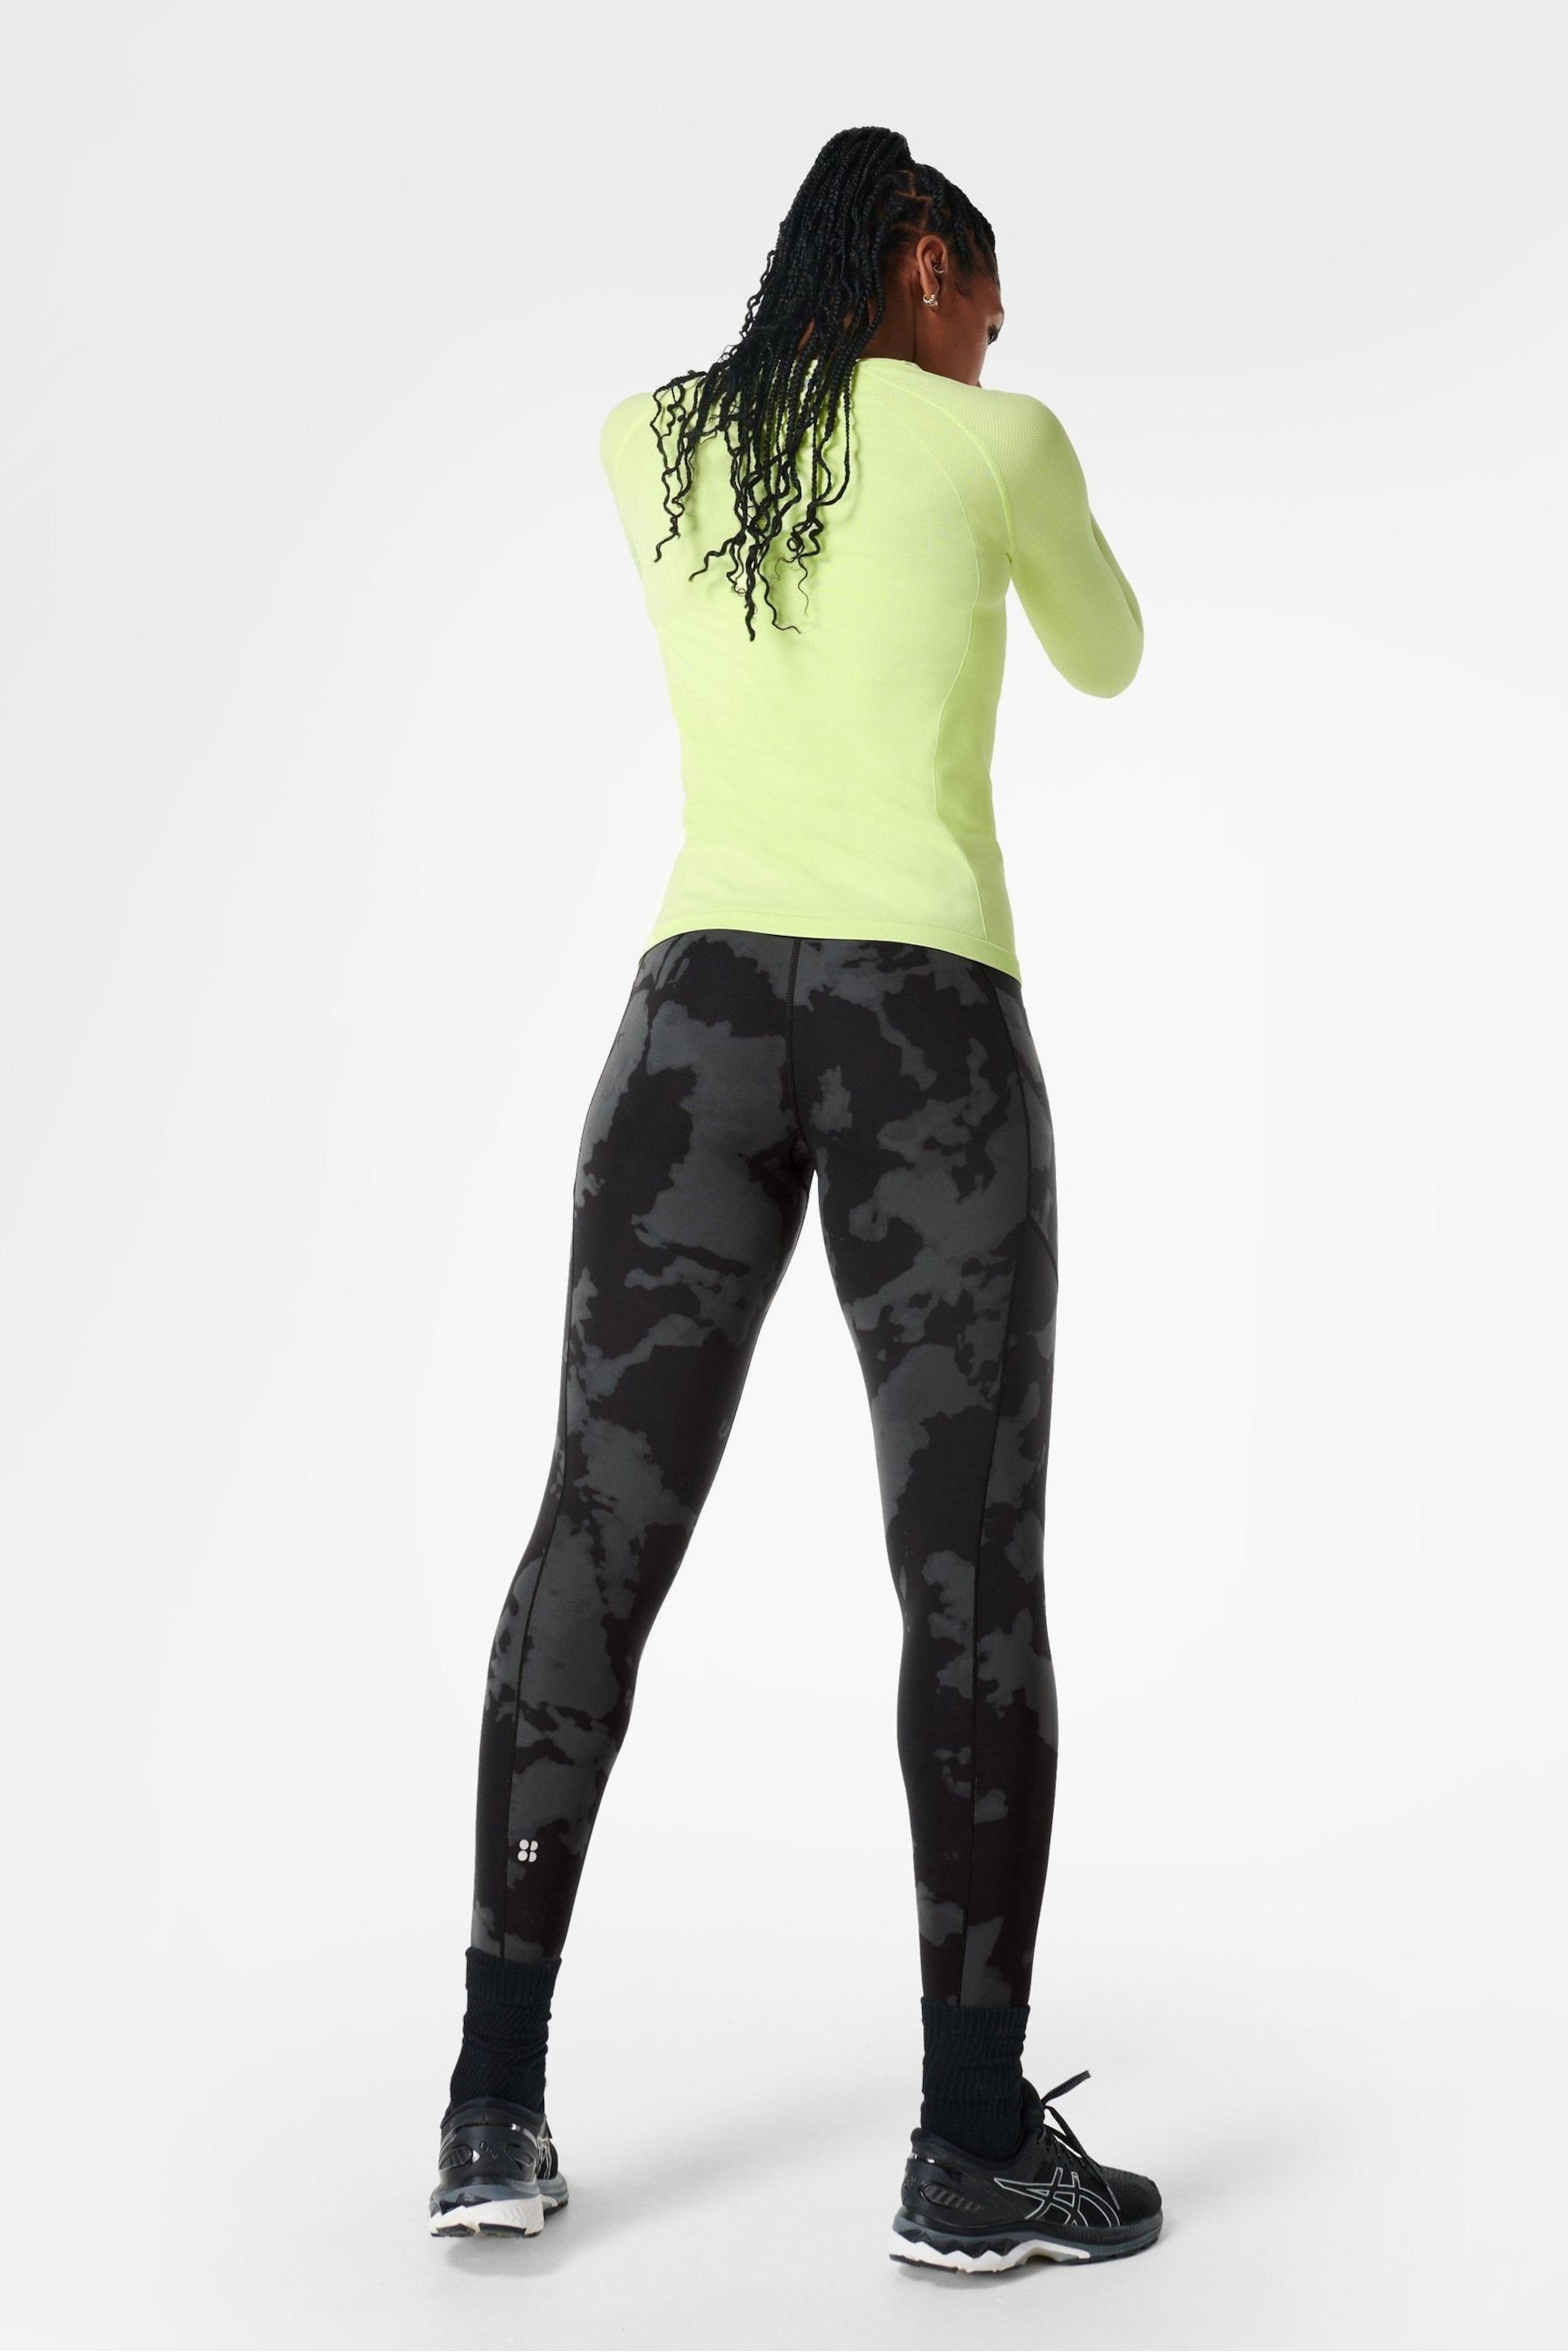 Sweaty Betty Black Fade Print Full Length Power UltraSculpt High Waist Workout Leggings - Image 3 of 6